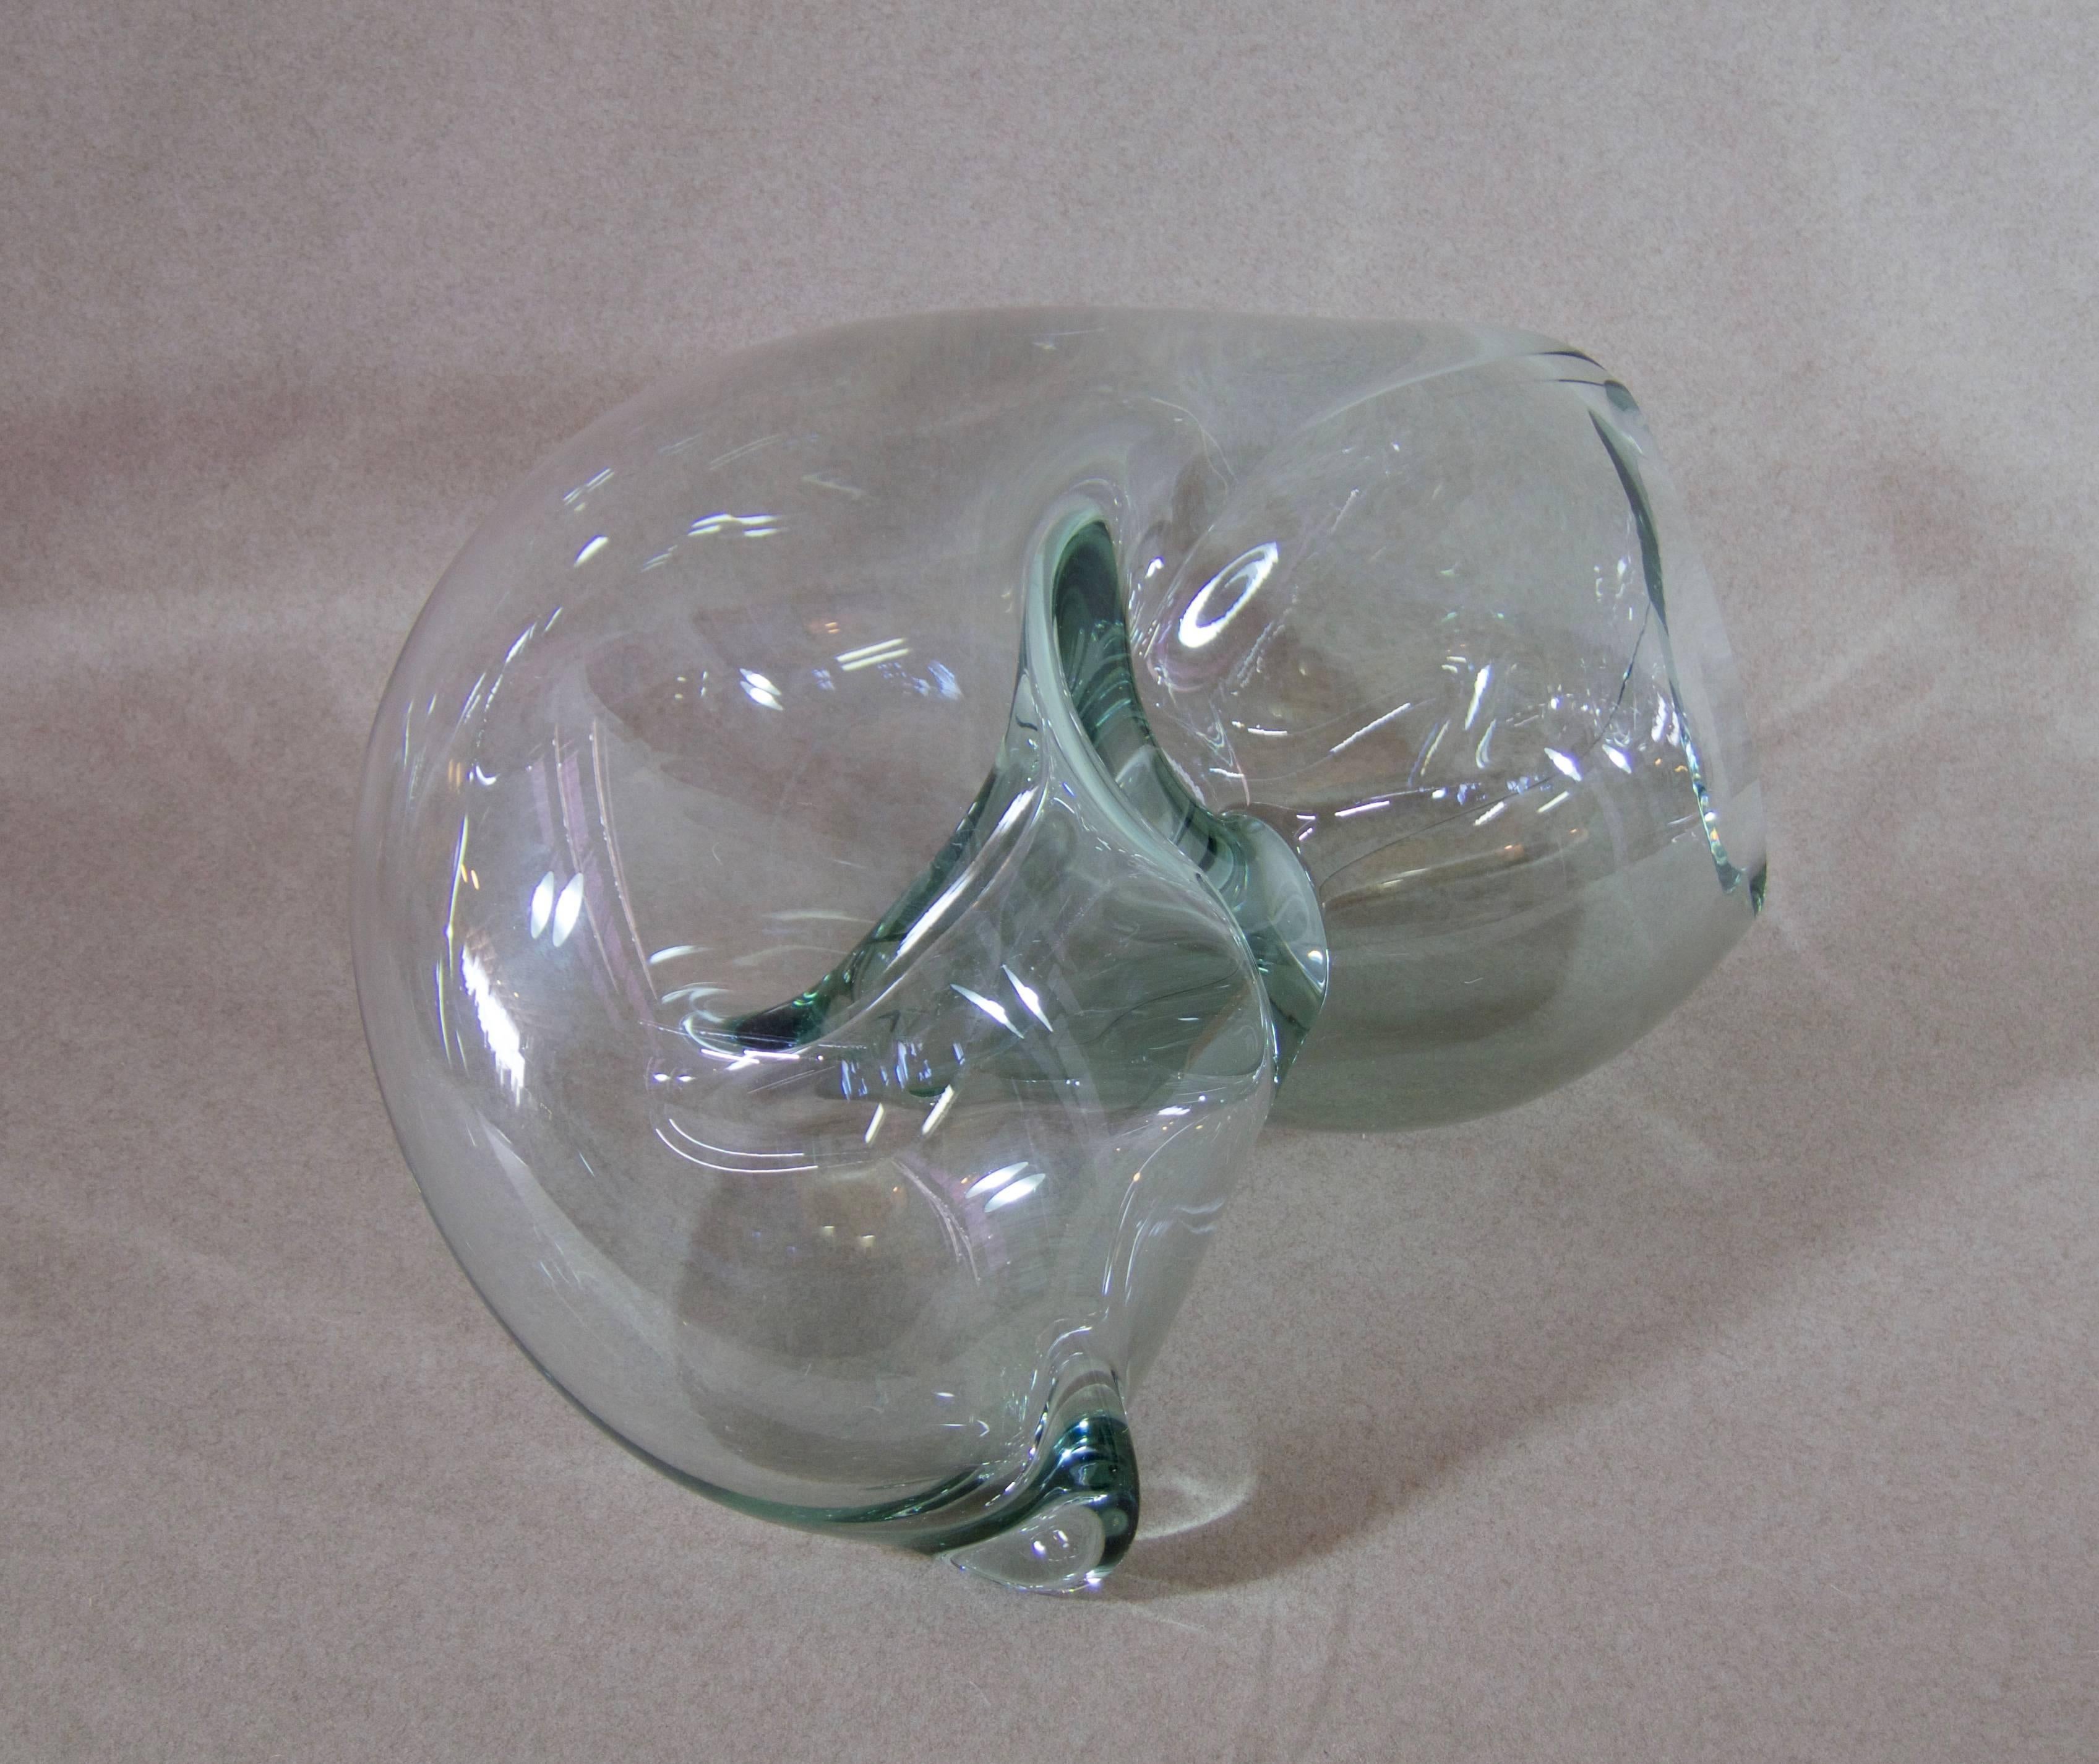 Biomorphic glass sculpture - Gray Abstract Sculpture by John Bingham